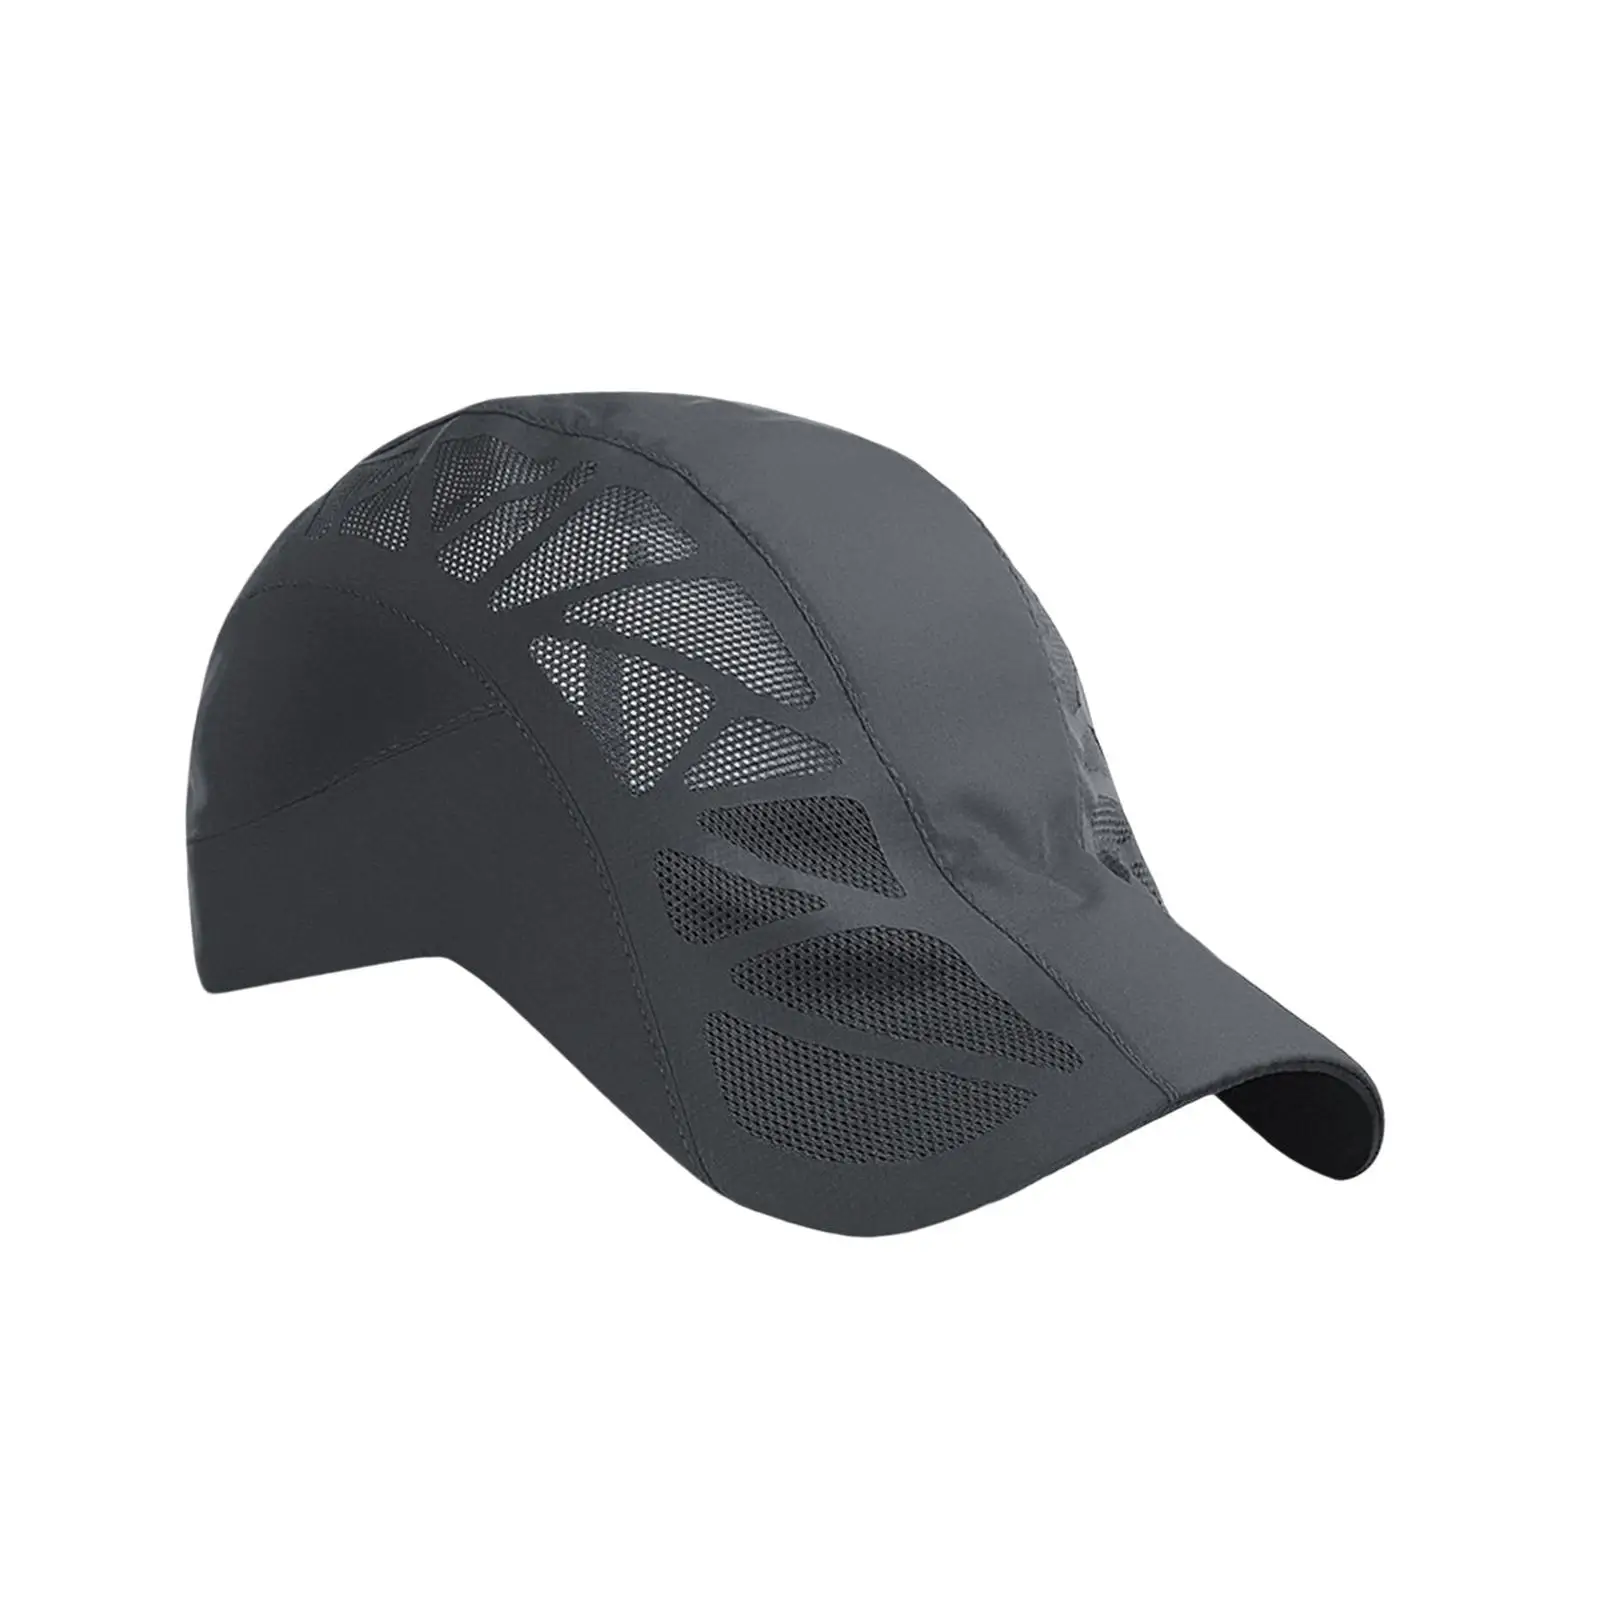 Summer Mesh Baseball Cap Adjustable Protection Flat Cap for Outdoor Sports